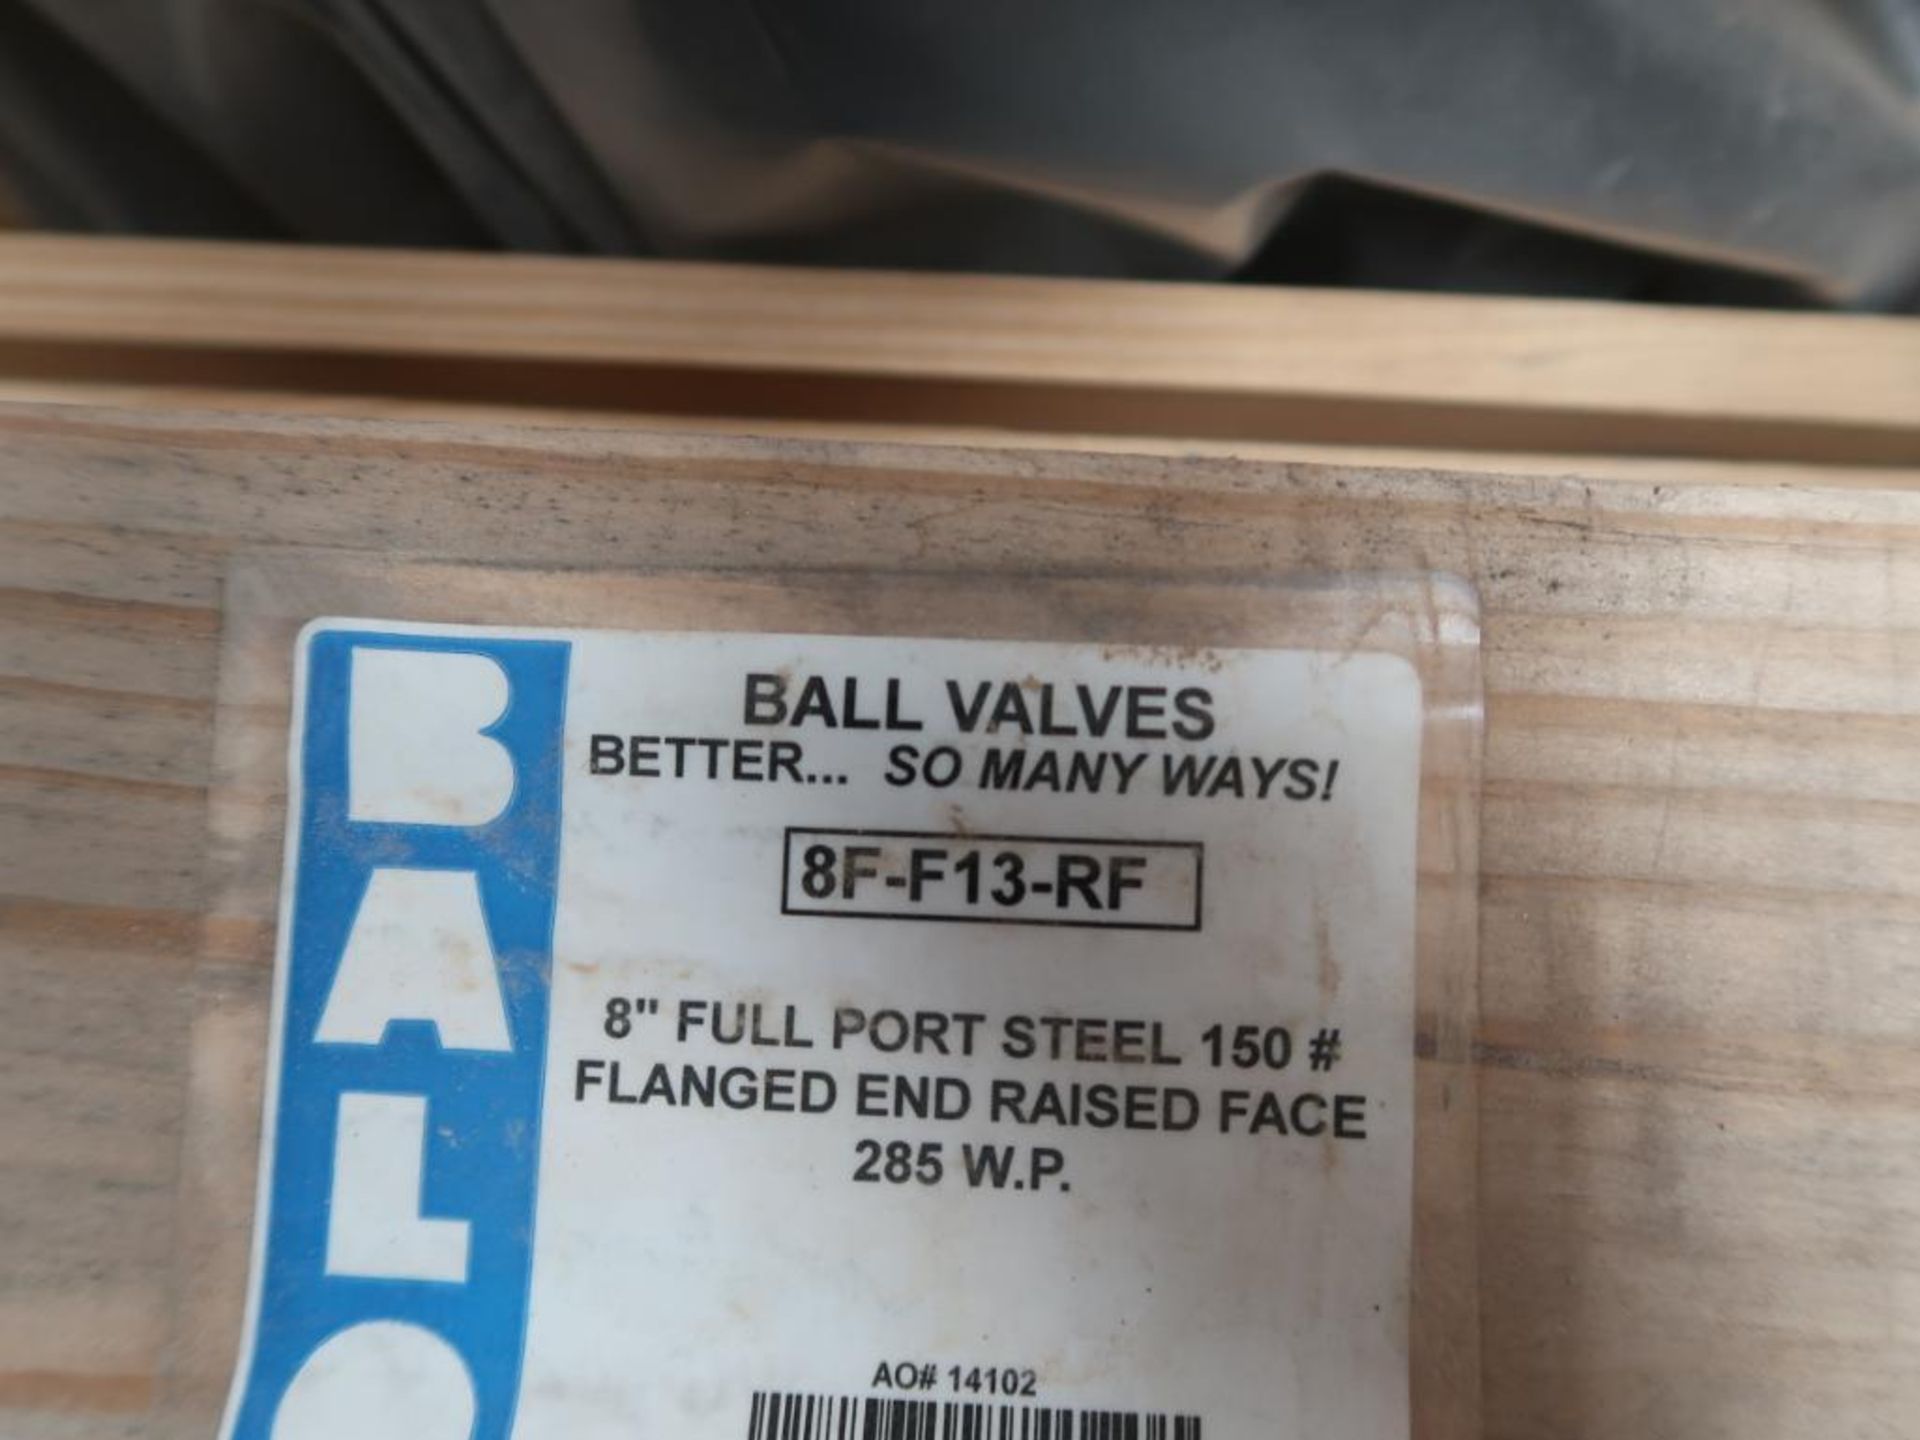 ASSORTED BALON VALVES ON (6) PALLETS - Image 11 of 11